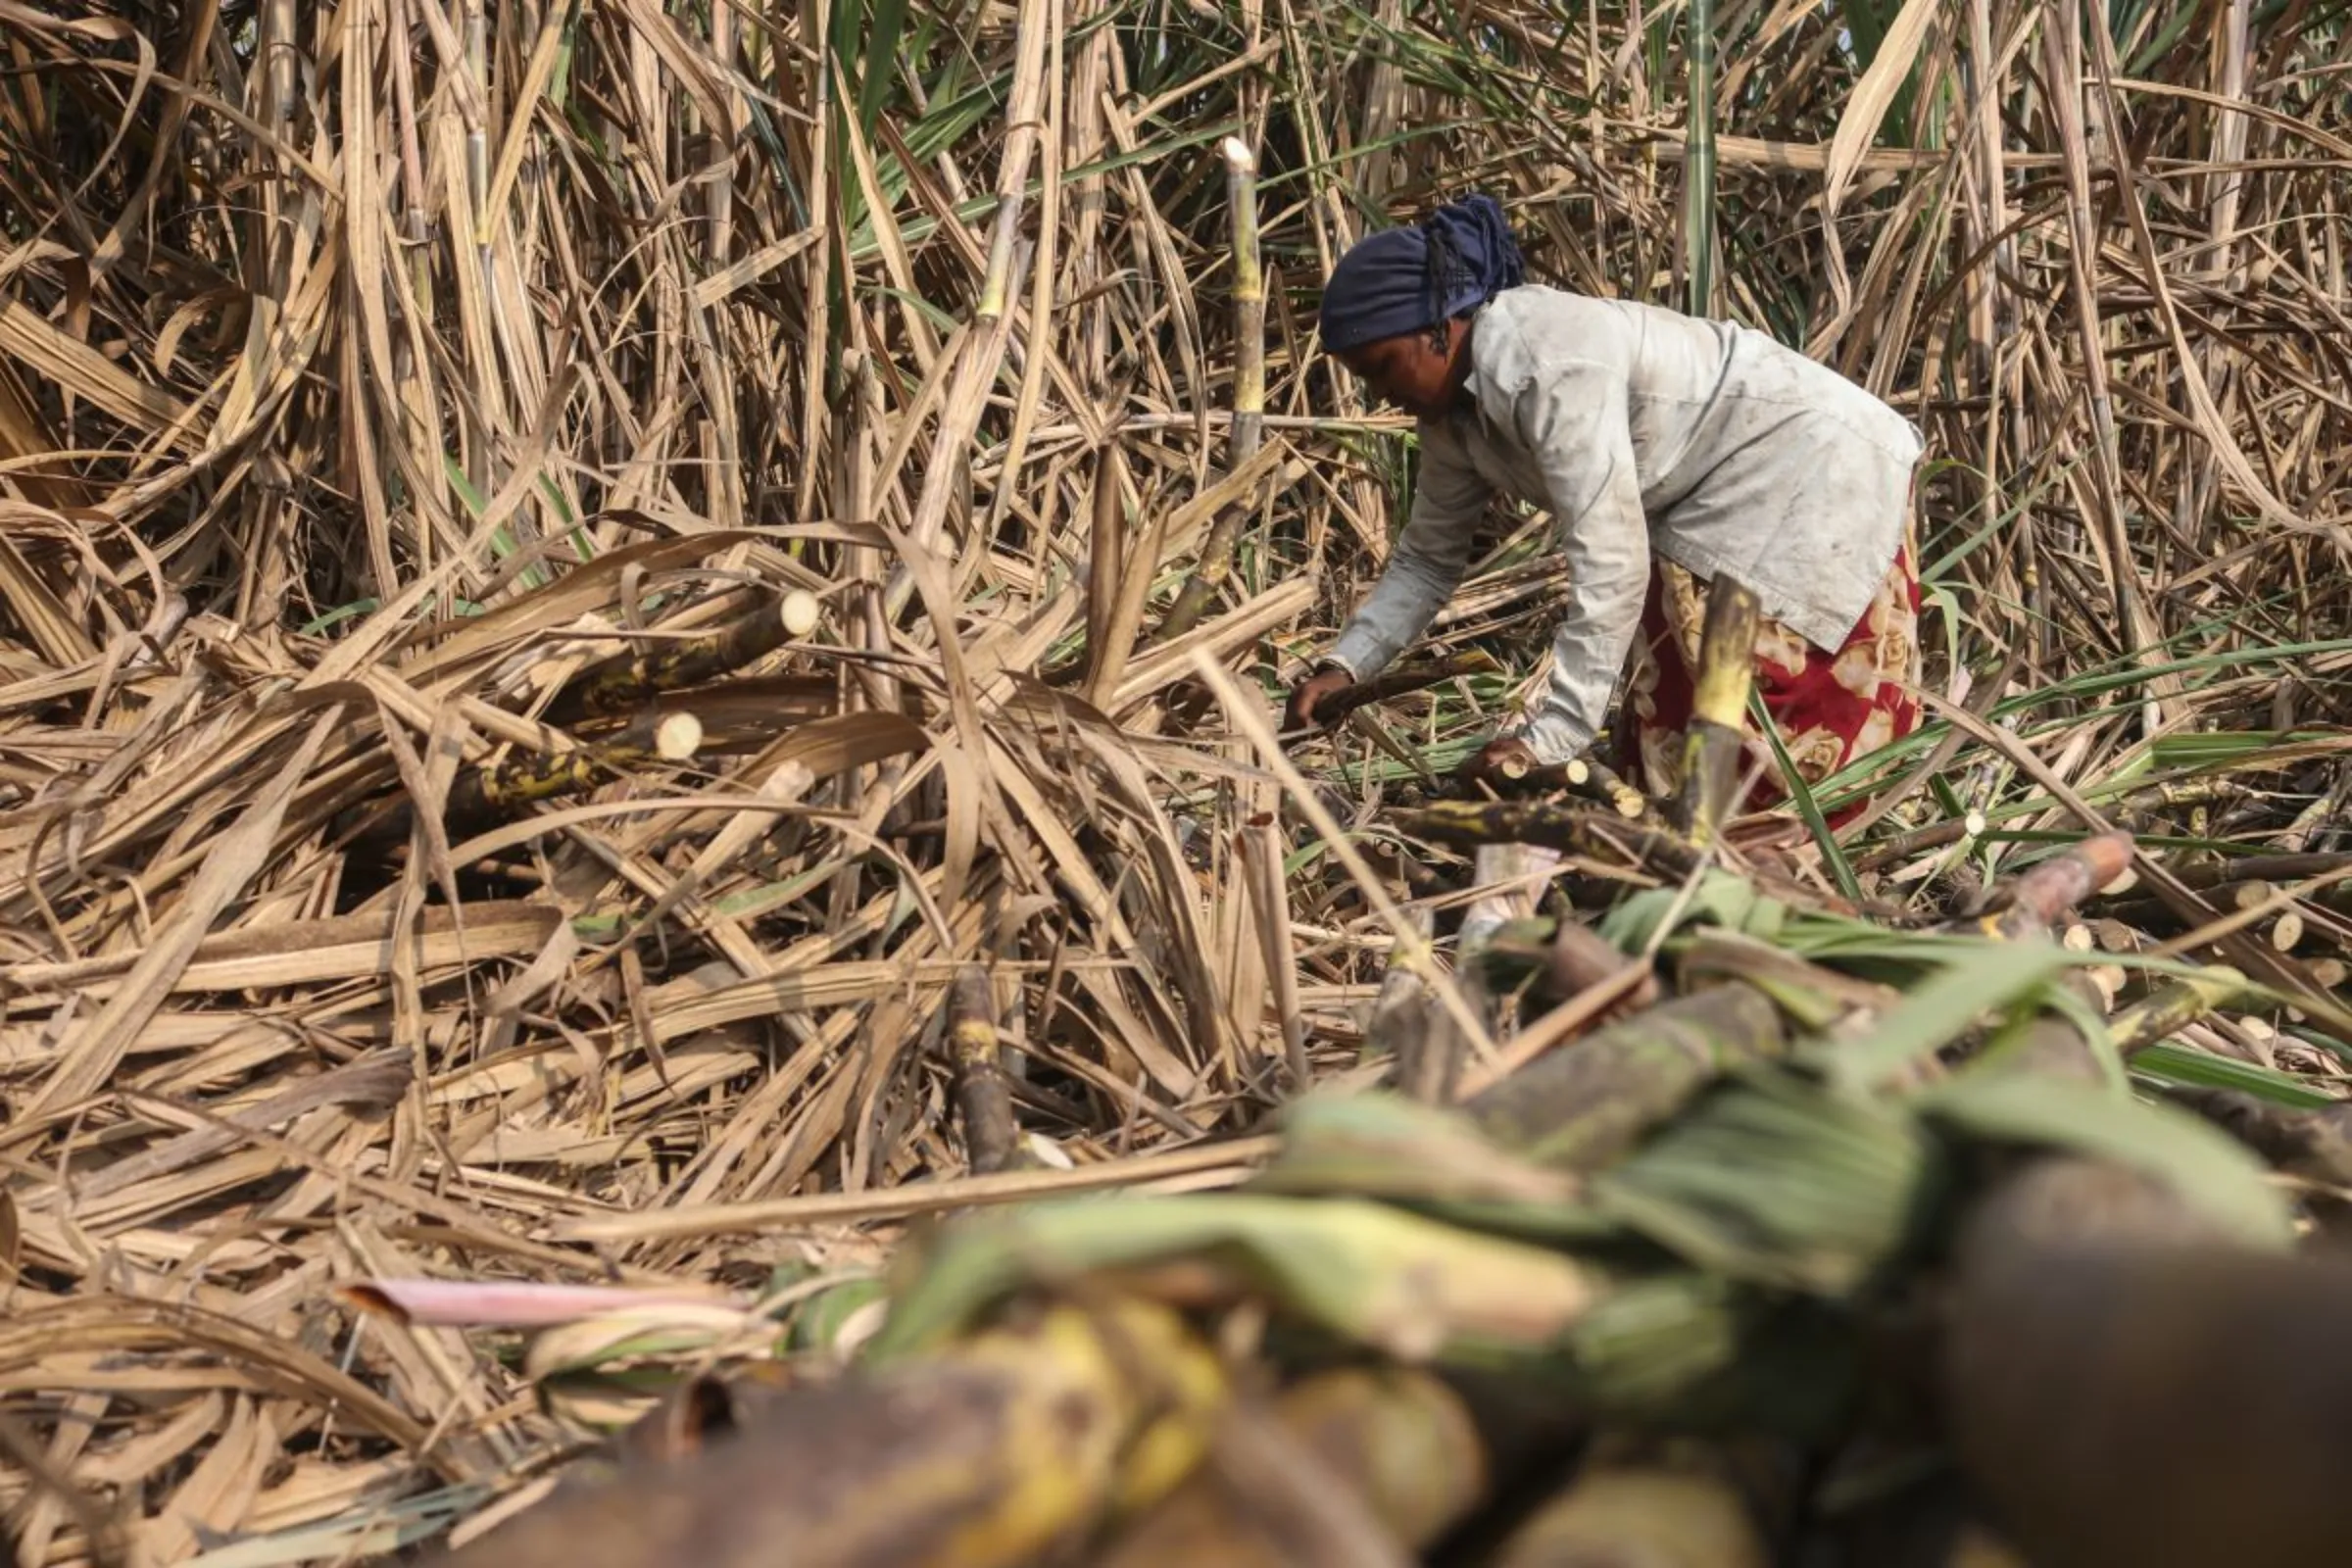 A woman cuts sugarcane in a sugarcane farm in Maharashtra’s Khochi village, India. December 17, 2022. Thomson Reuters Foundation/Sanket Jain